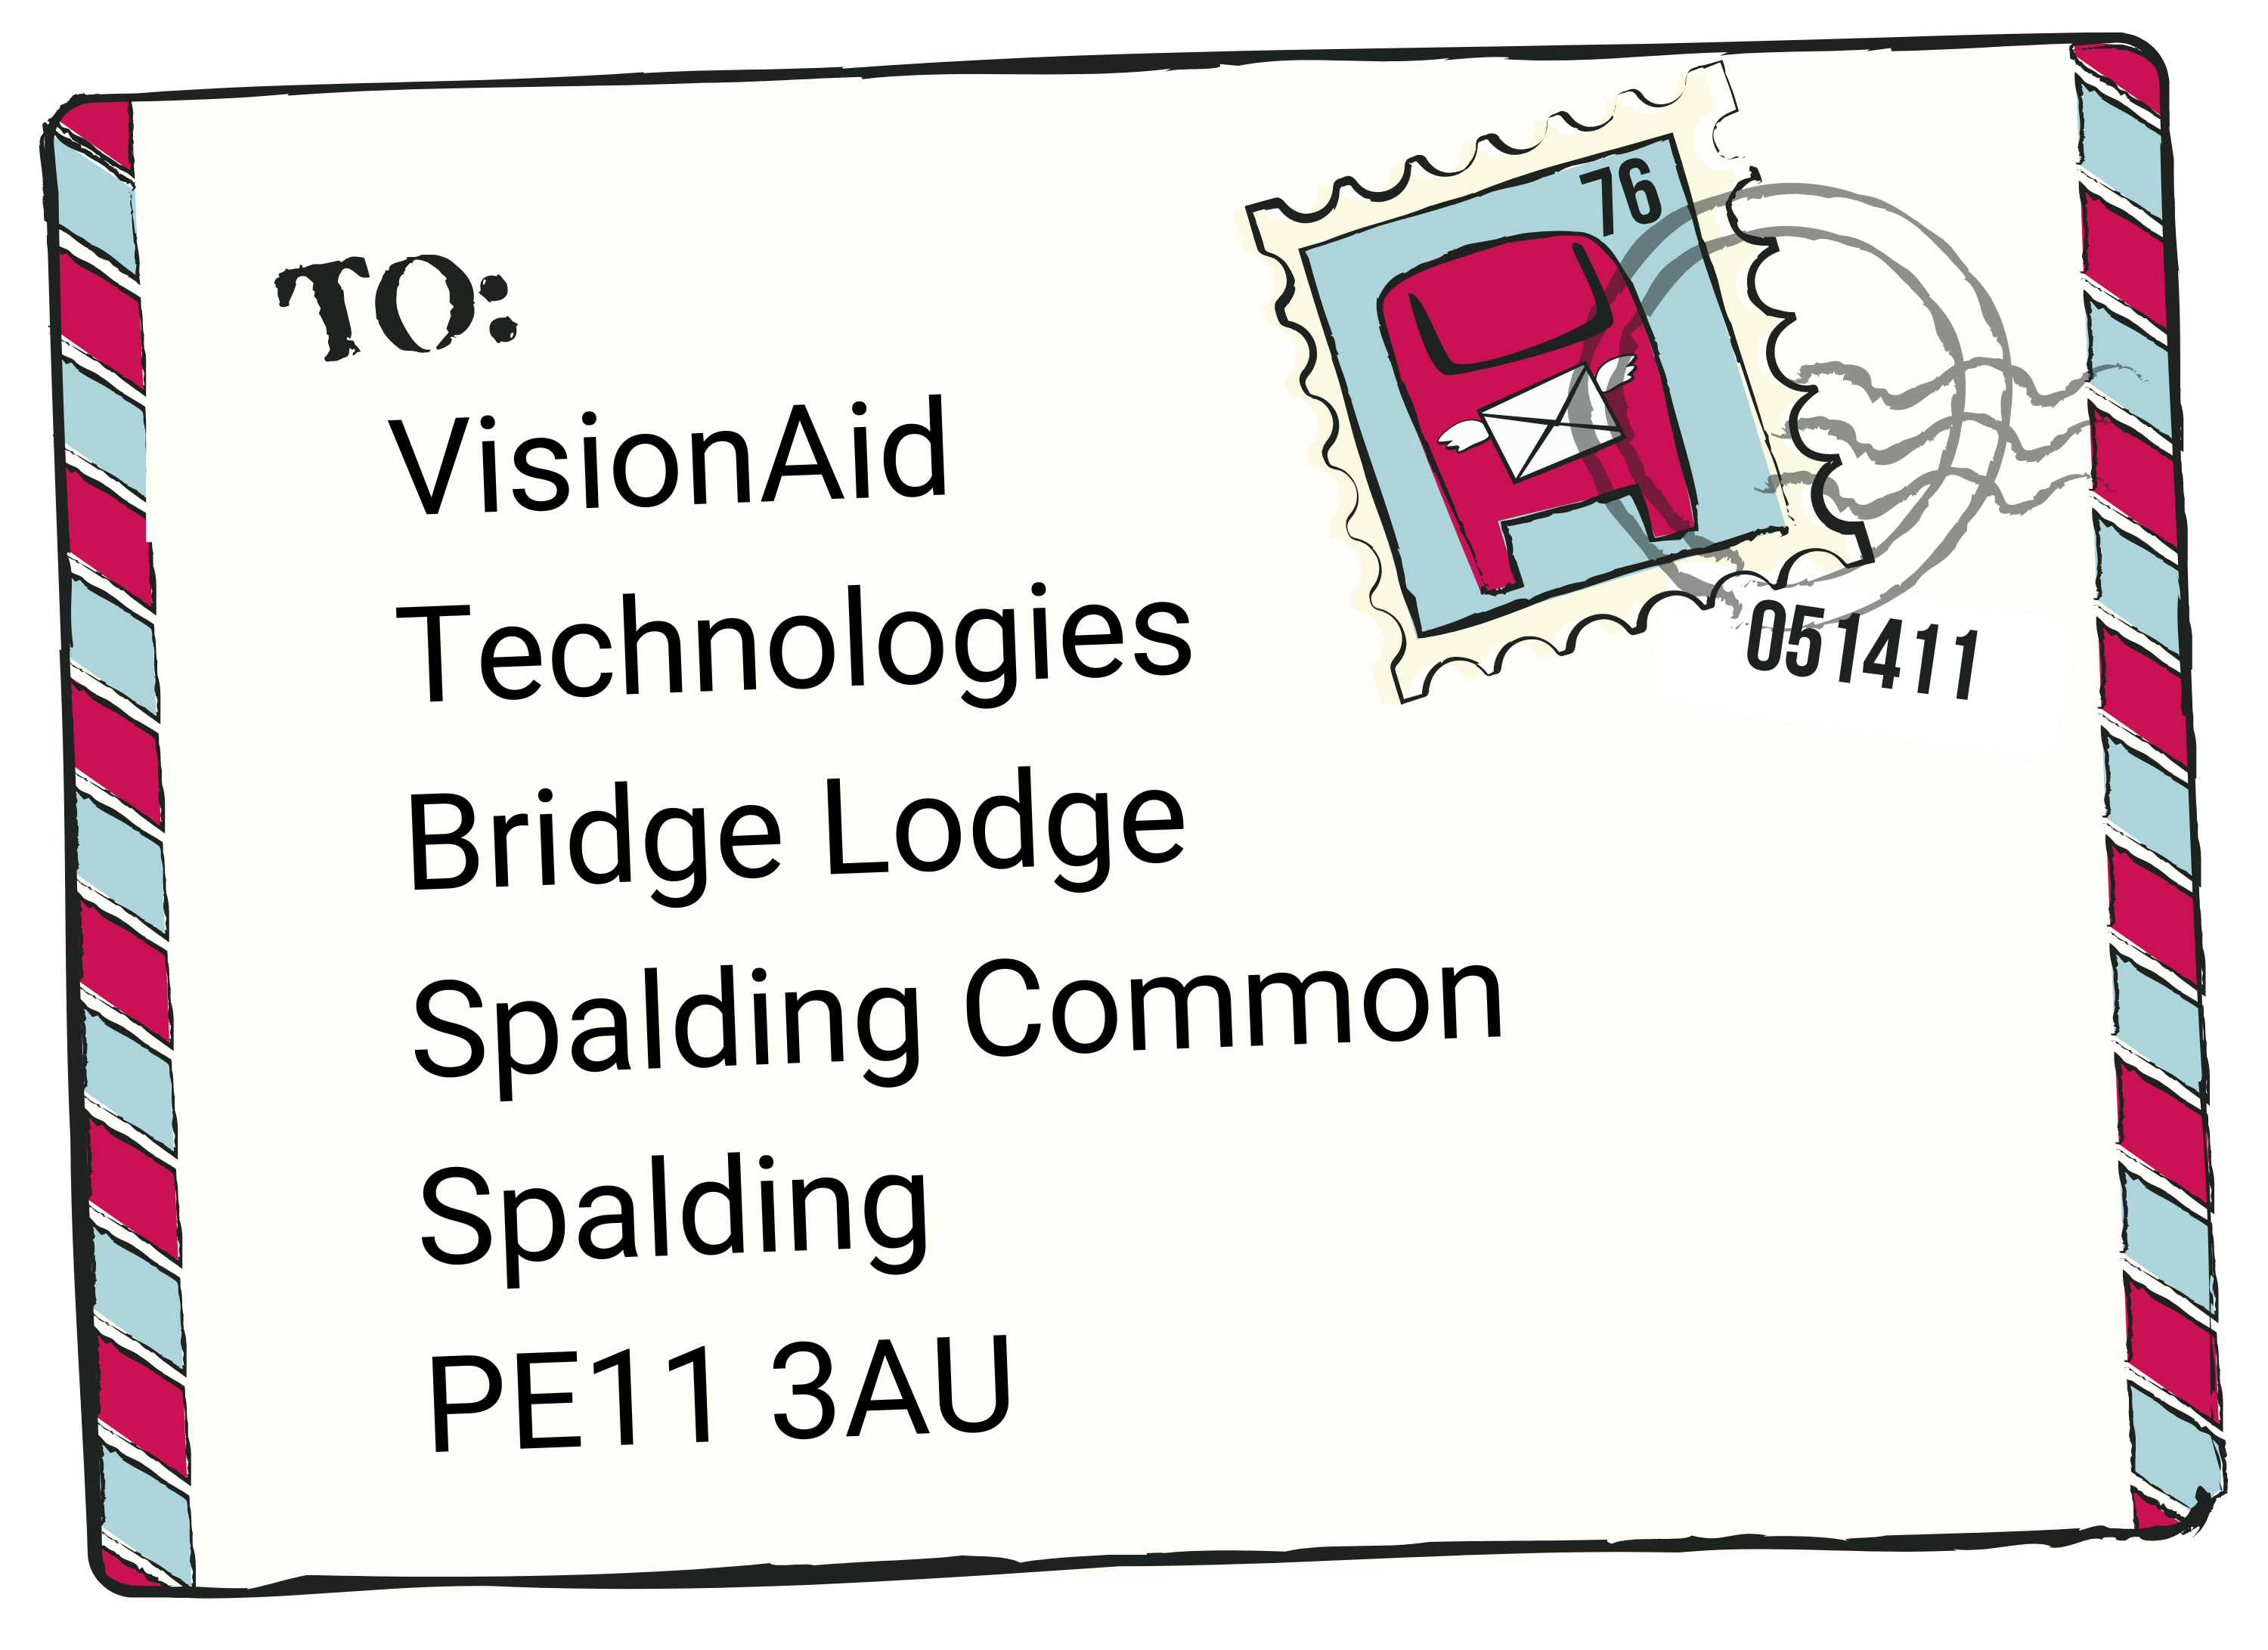 Image of envelope with the VisionAid address on: VisionAid Technologies, Bridge Lodge, Spalding Common, Spalding, PE11 3AU, 